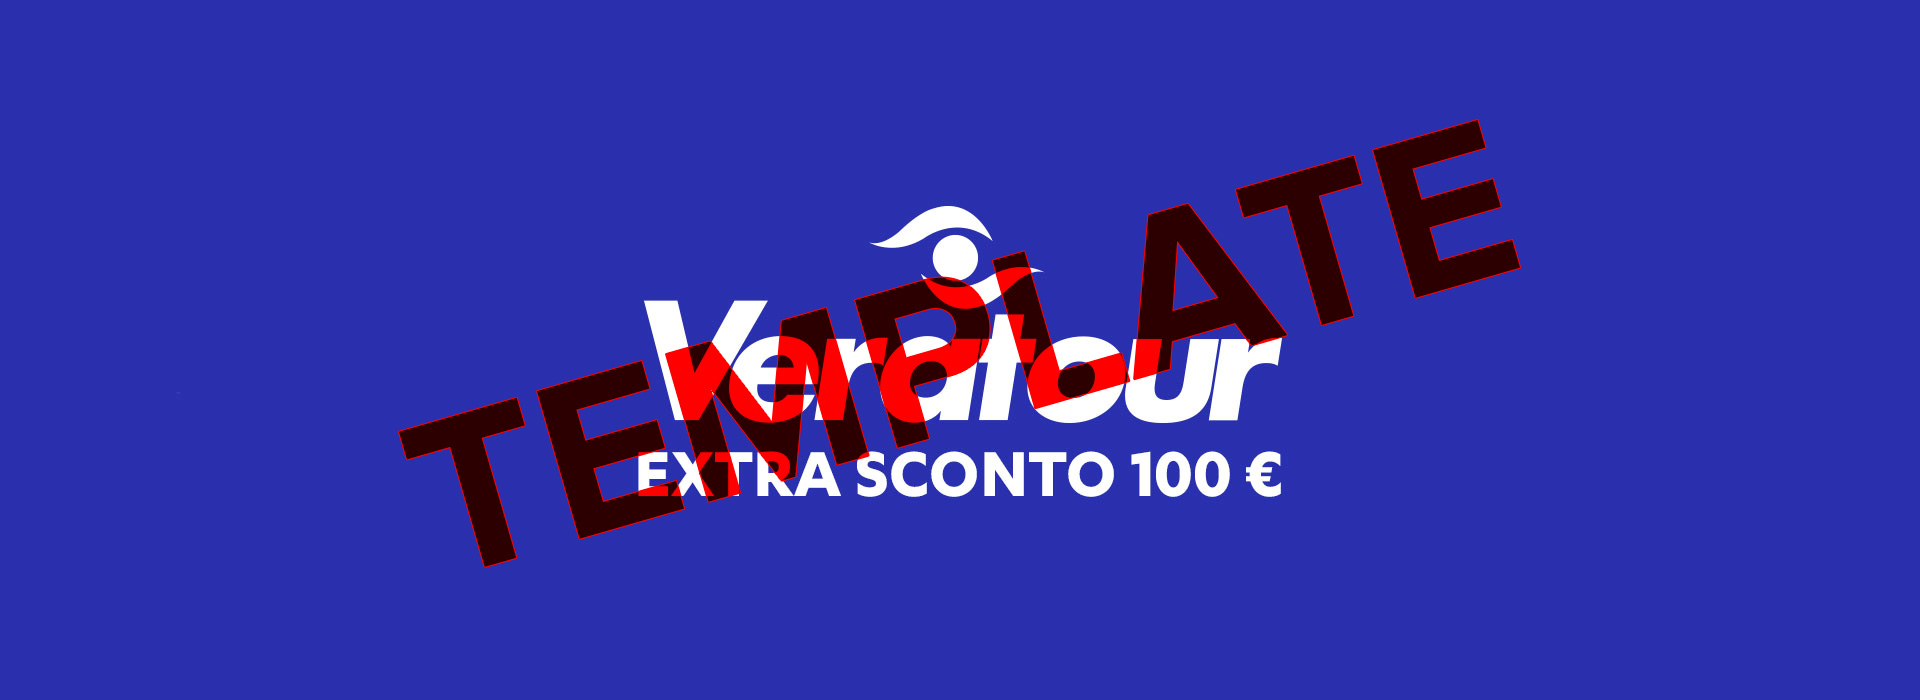 TEMPLATE: Flash Sale Veratour: EXTRA SCONTO 100 €